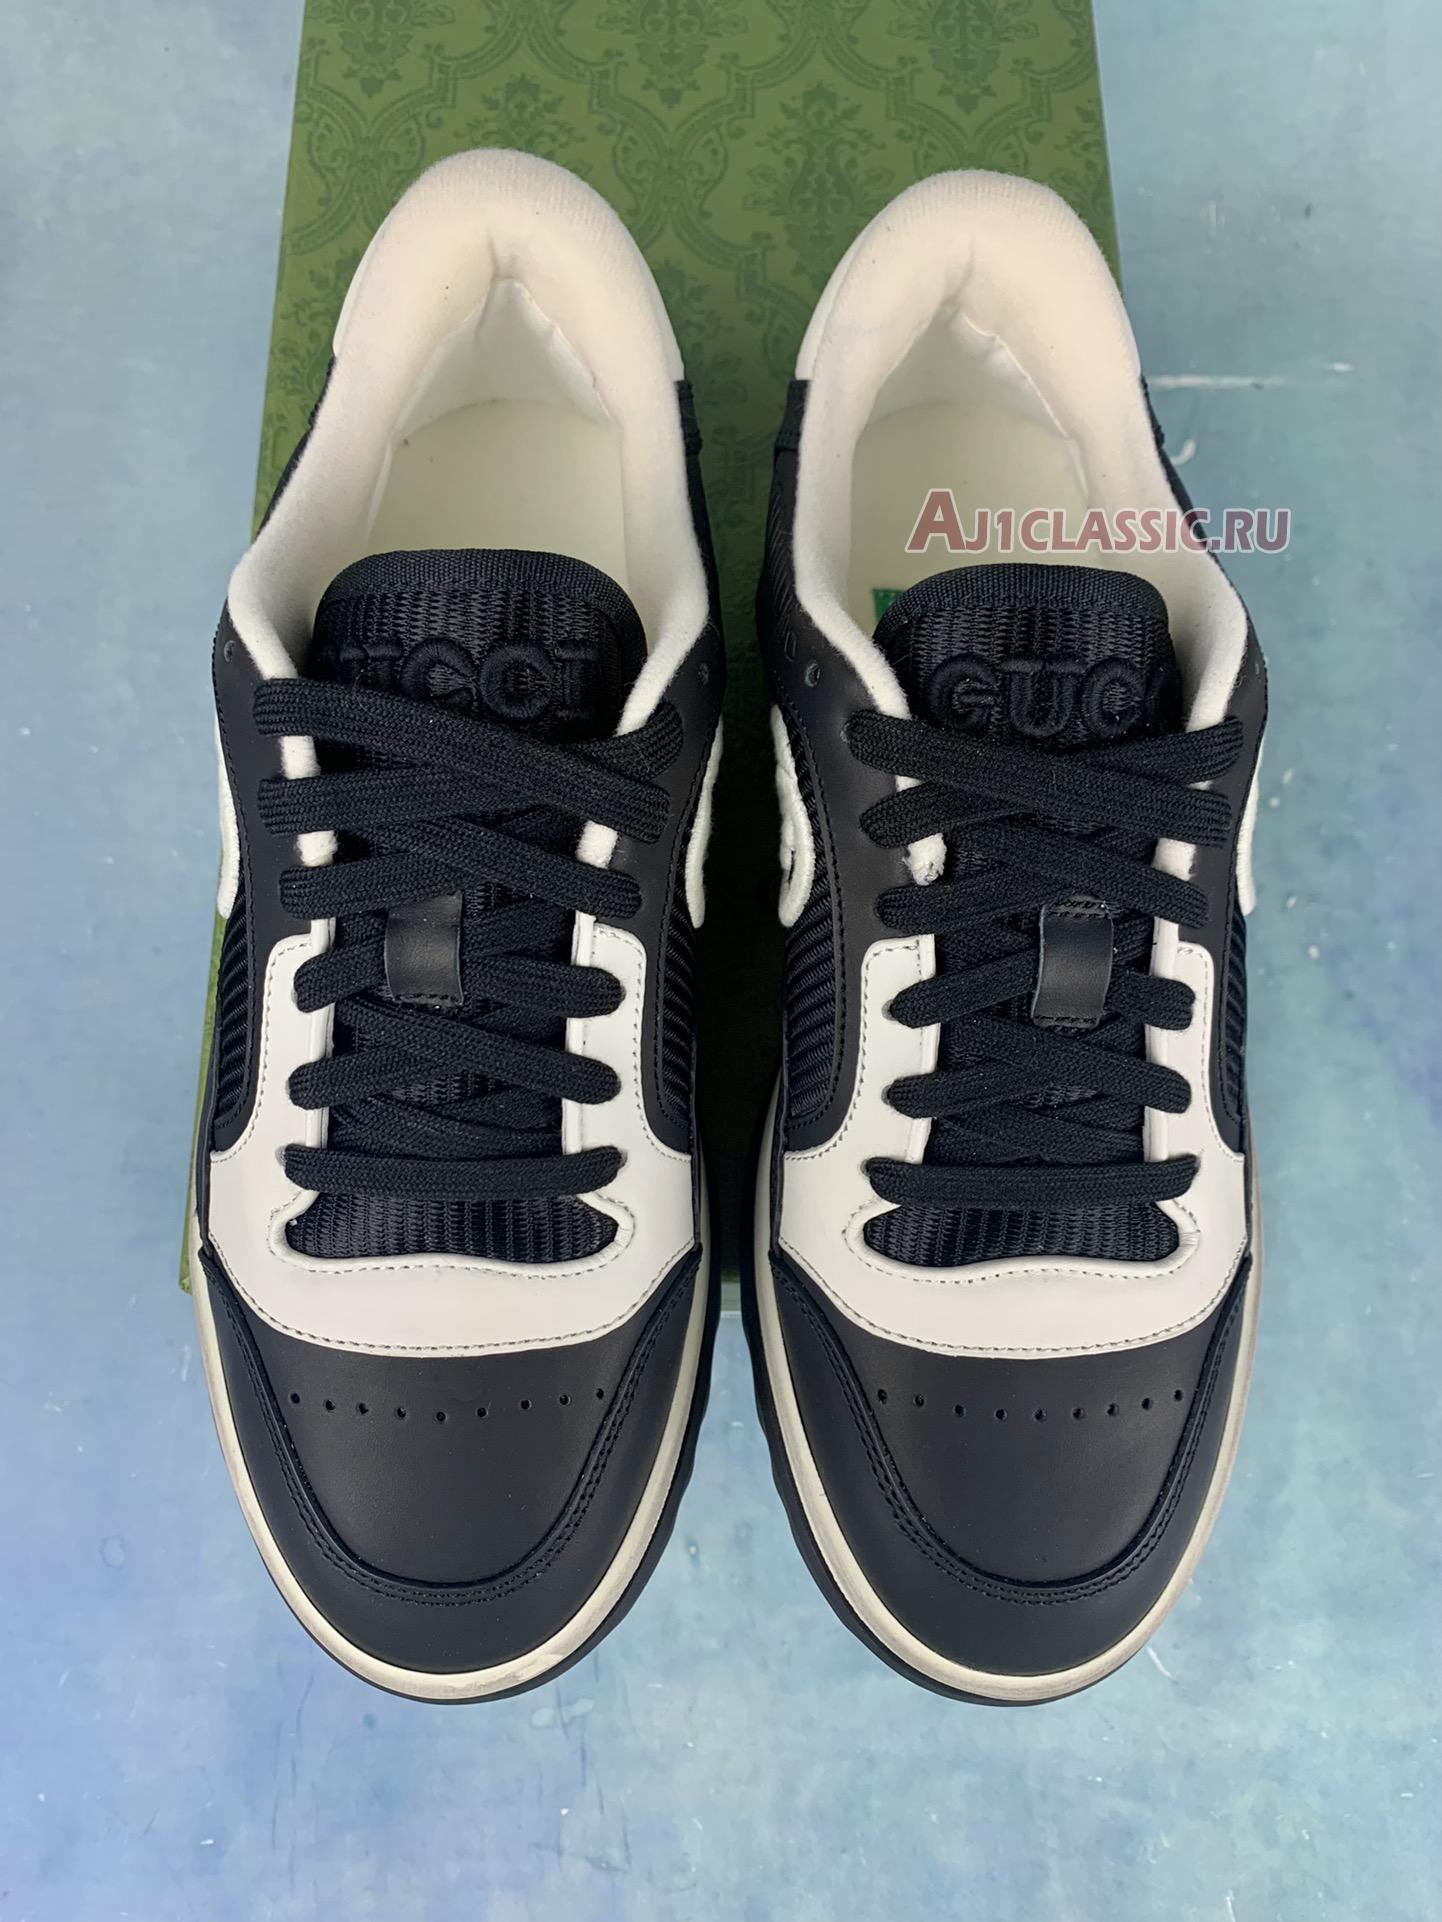 Gucci MAC80 Sneaker "Black Off White" 756811 AAB79 1051